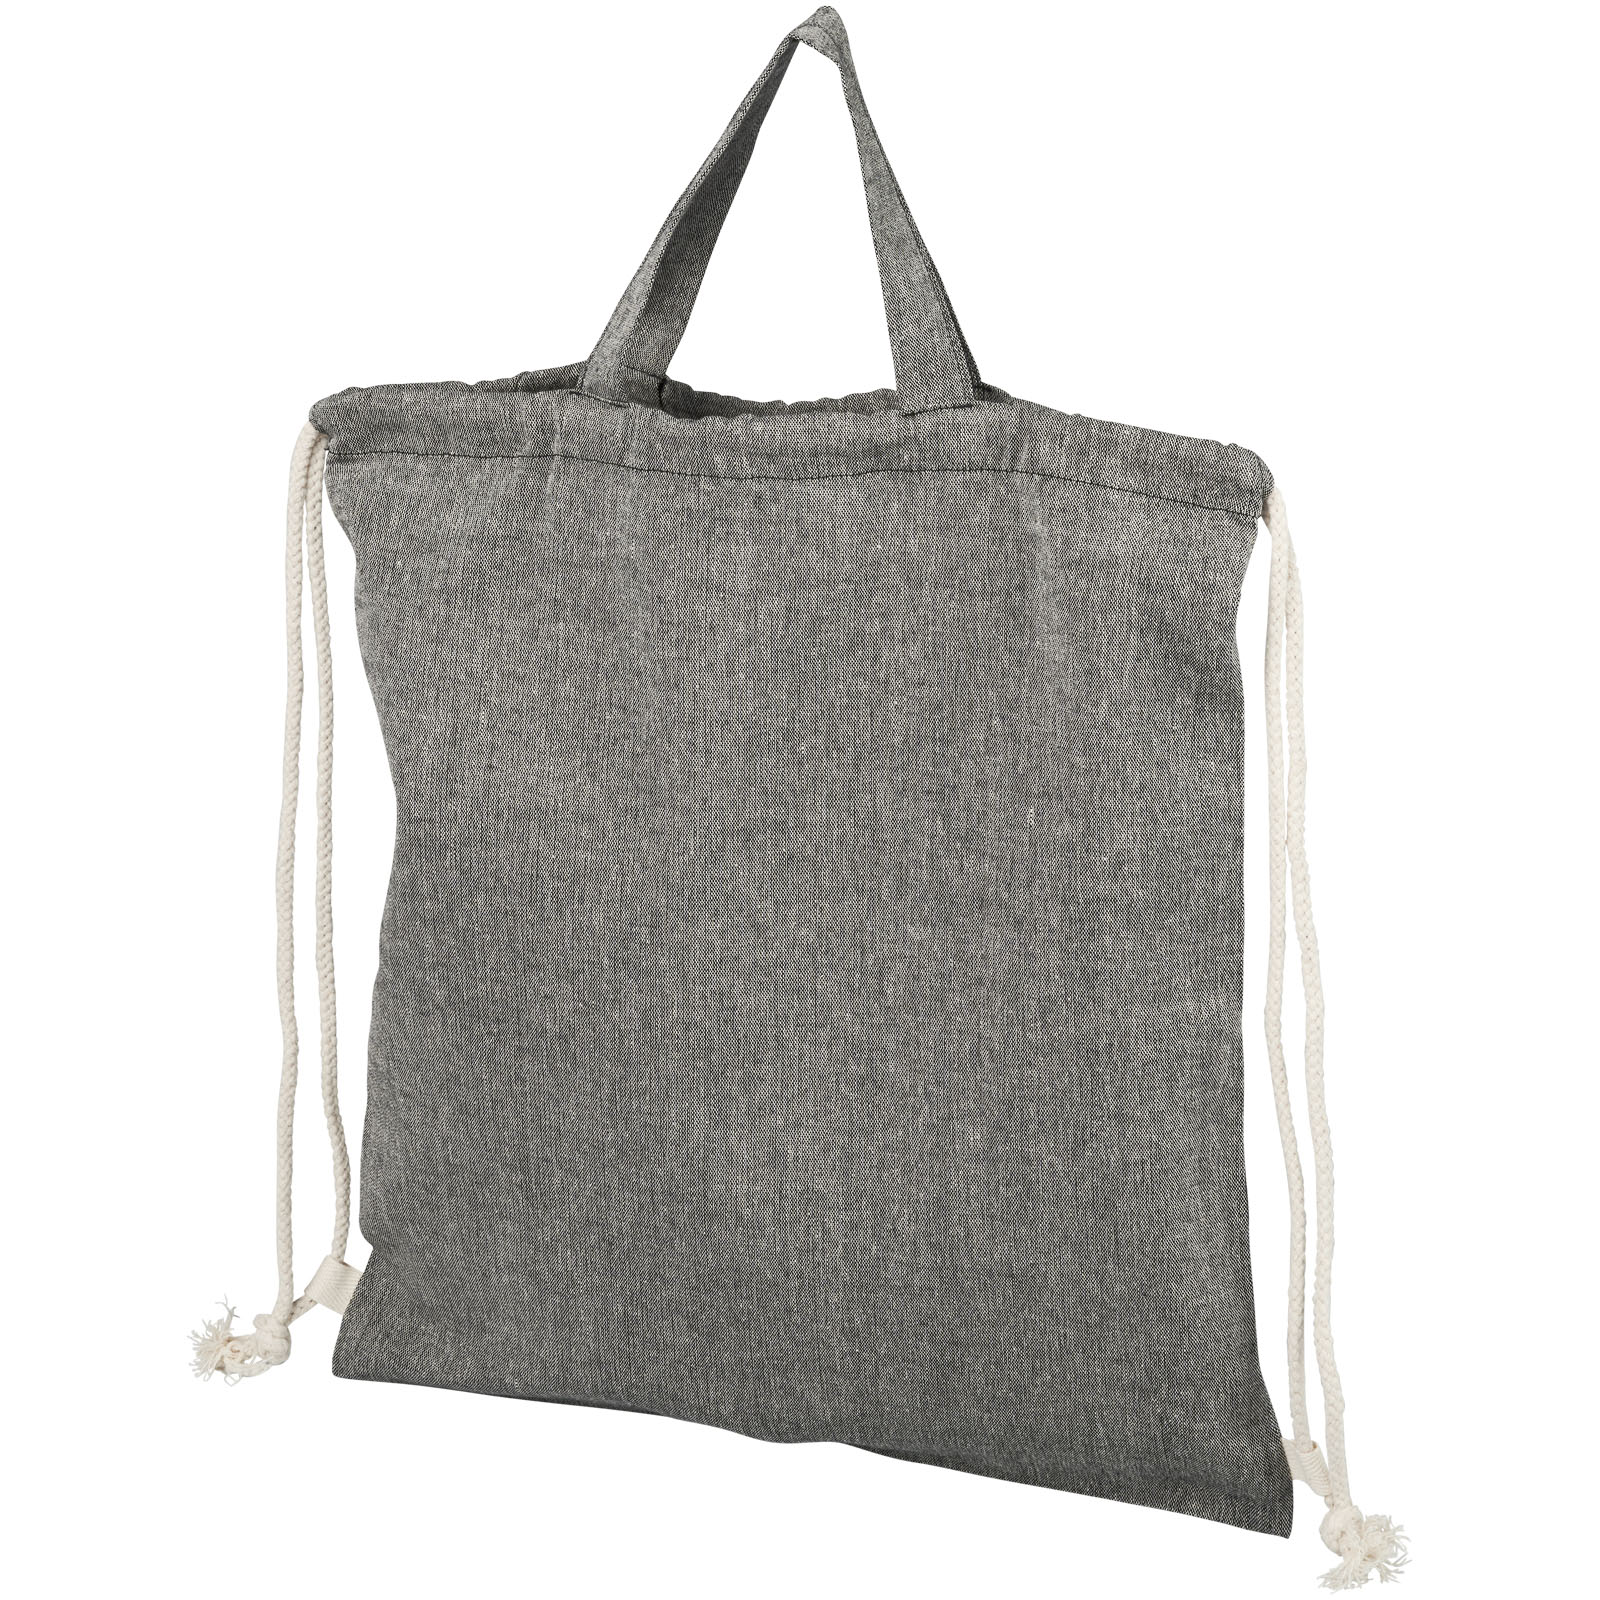 Bags - Pheebs 150 g/m² recycled drawstring bag 6L